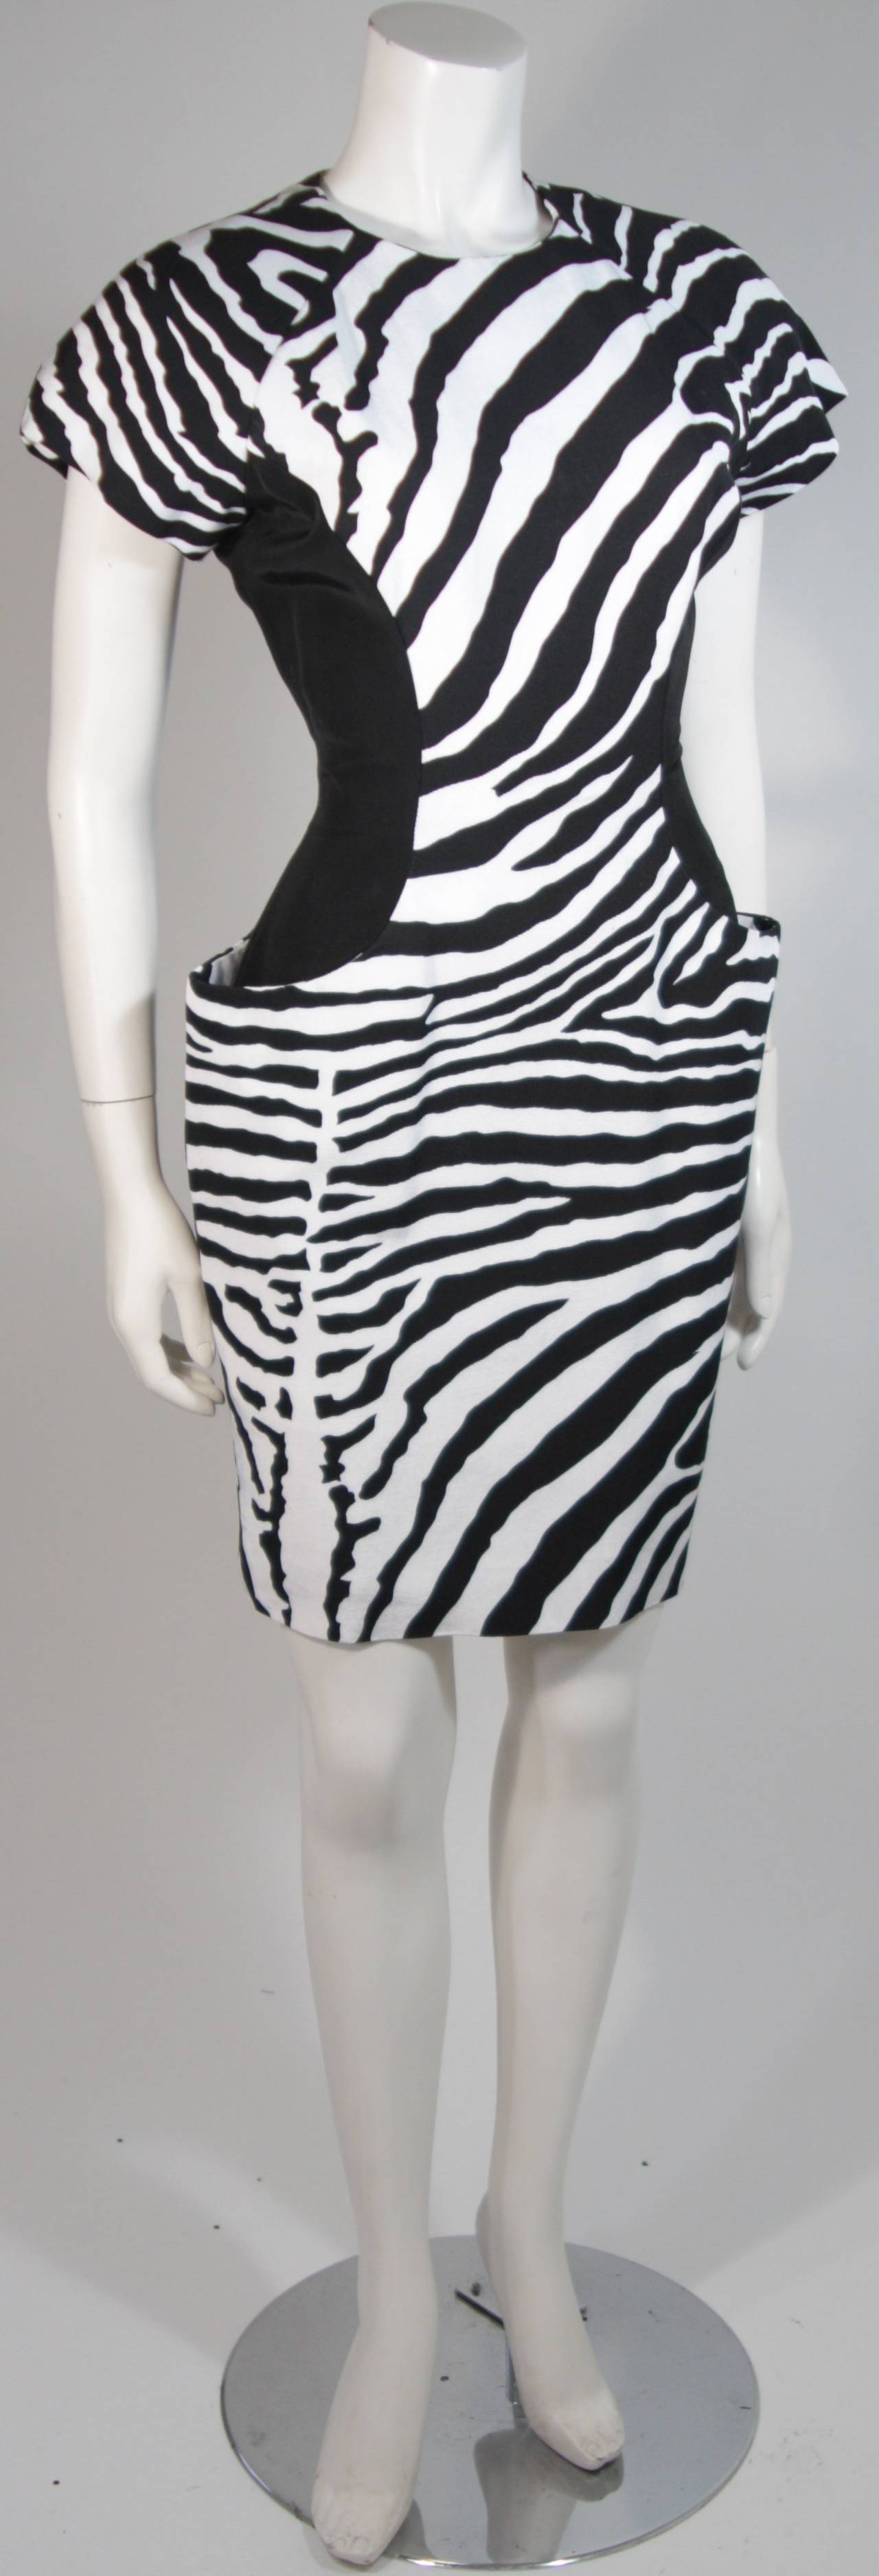 Women's Vicky Tiel Black and White Zebra Patterned Cocktail Dress Size Small